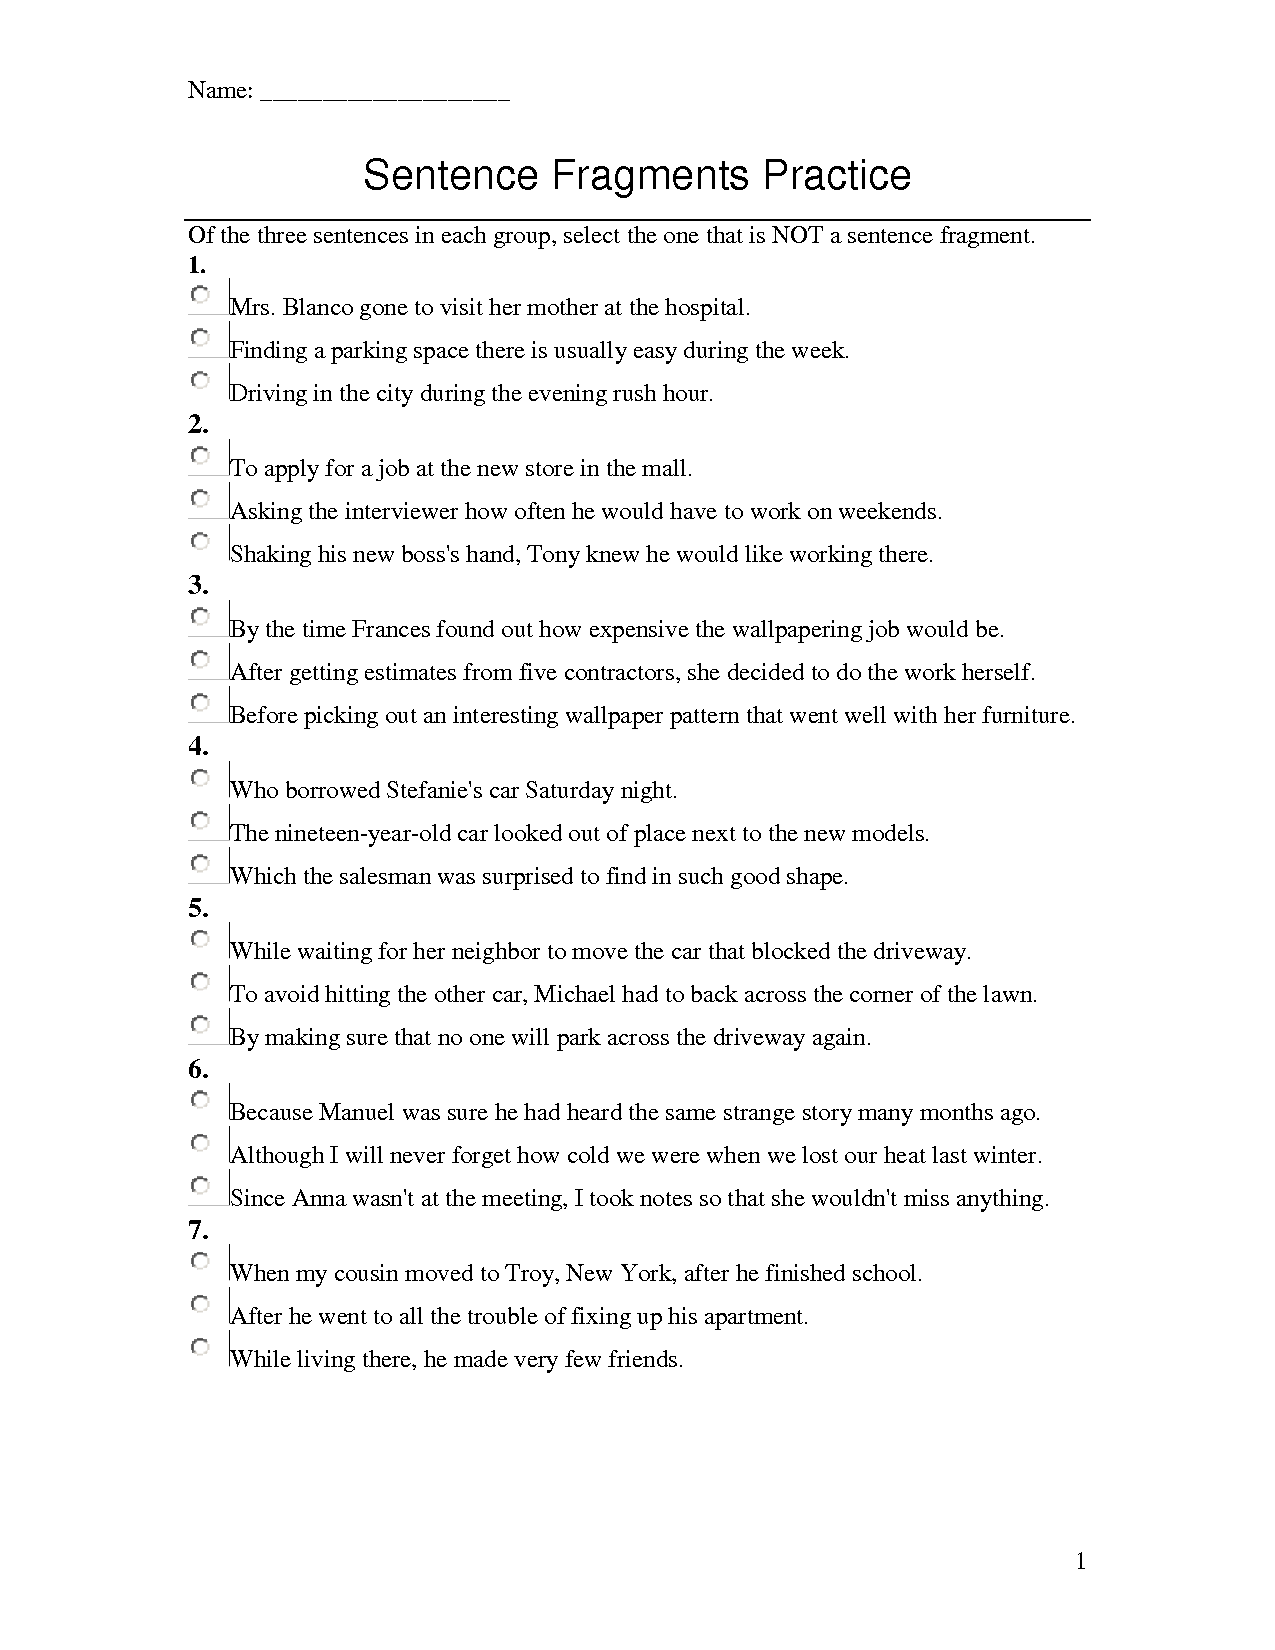 Identifying Sentence Fragments Worksheets Image